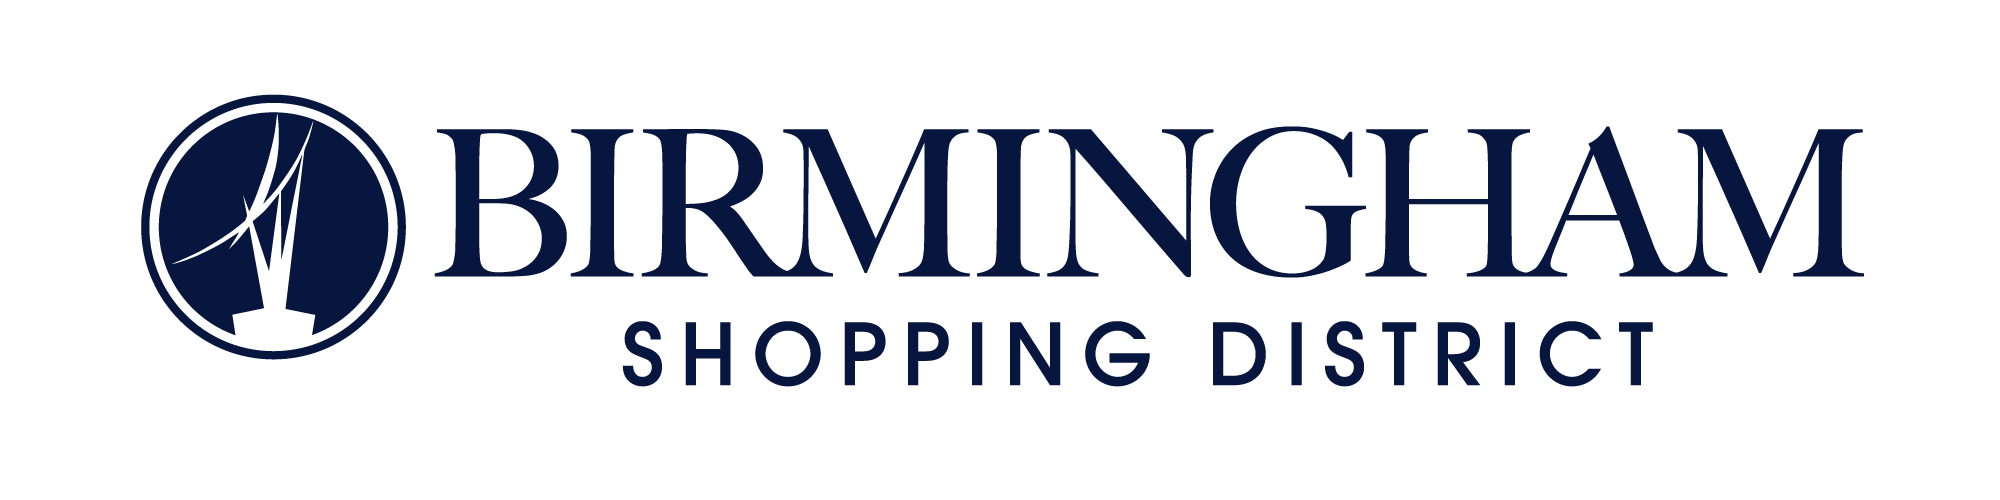 Birmingham Shopping District logo